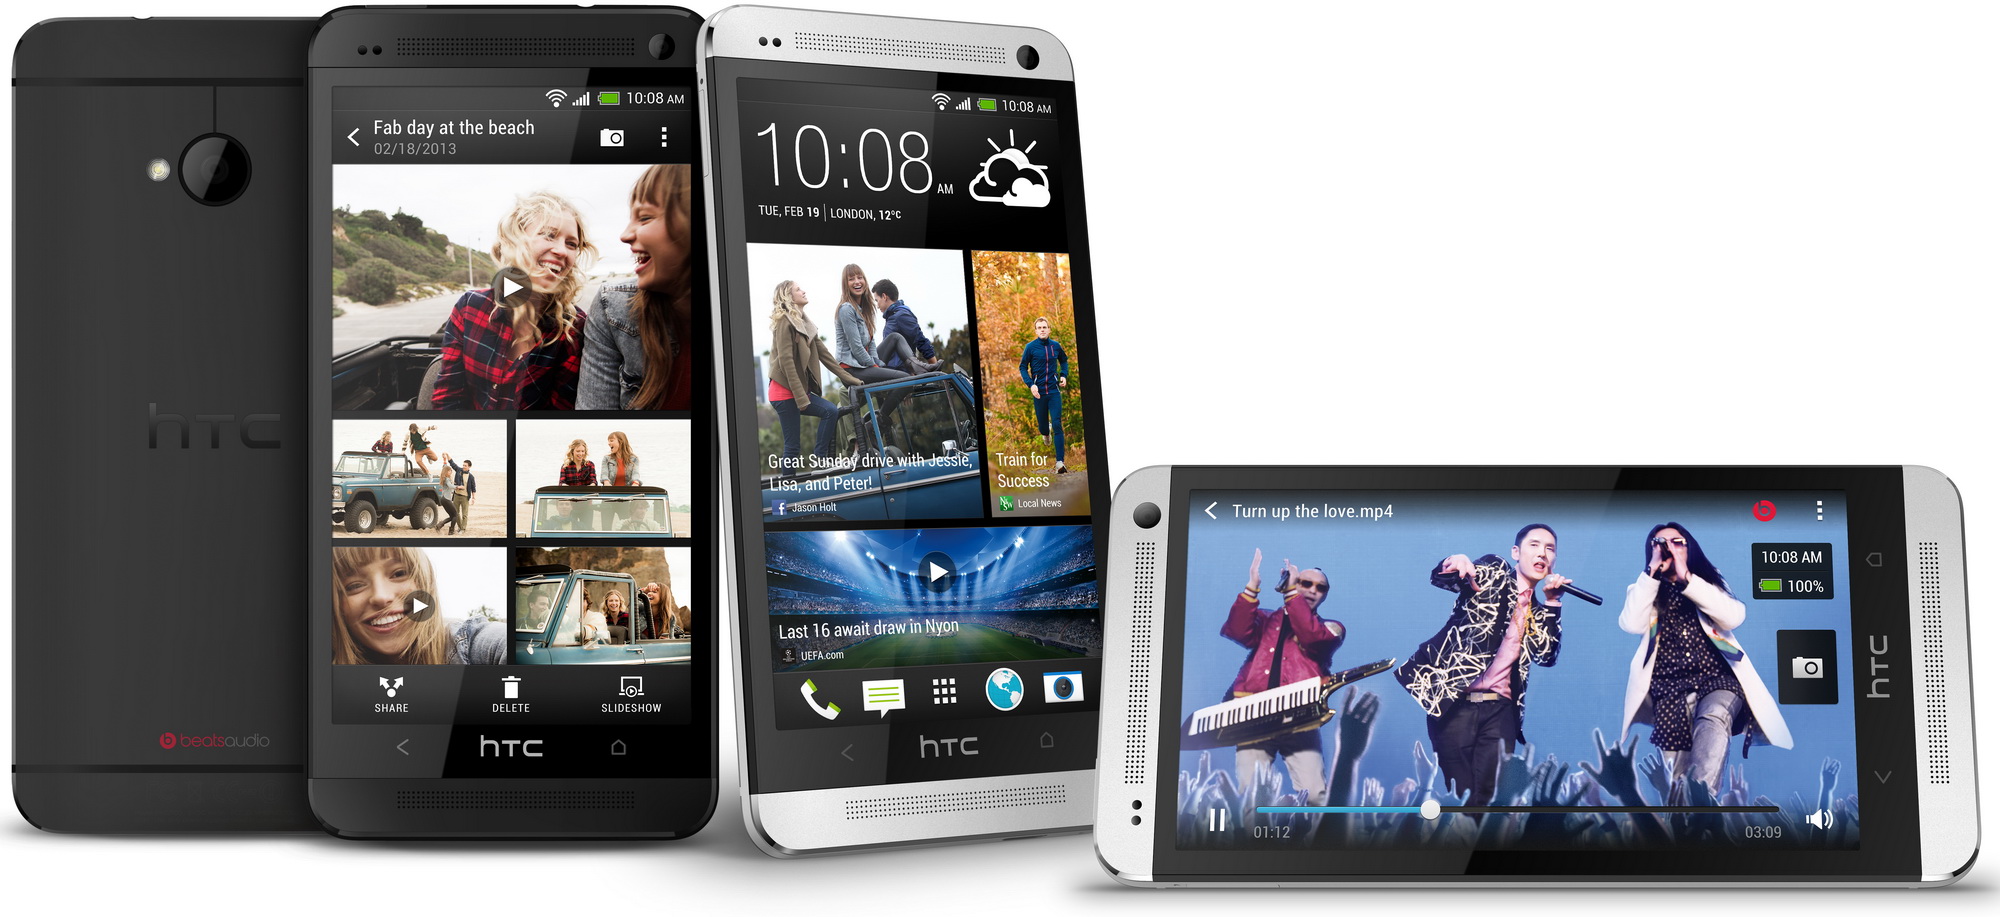 HTC One официально представлен